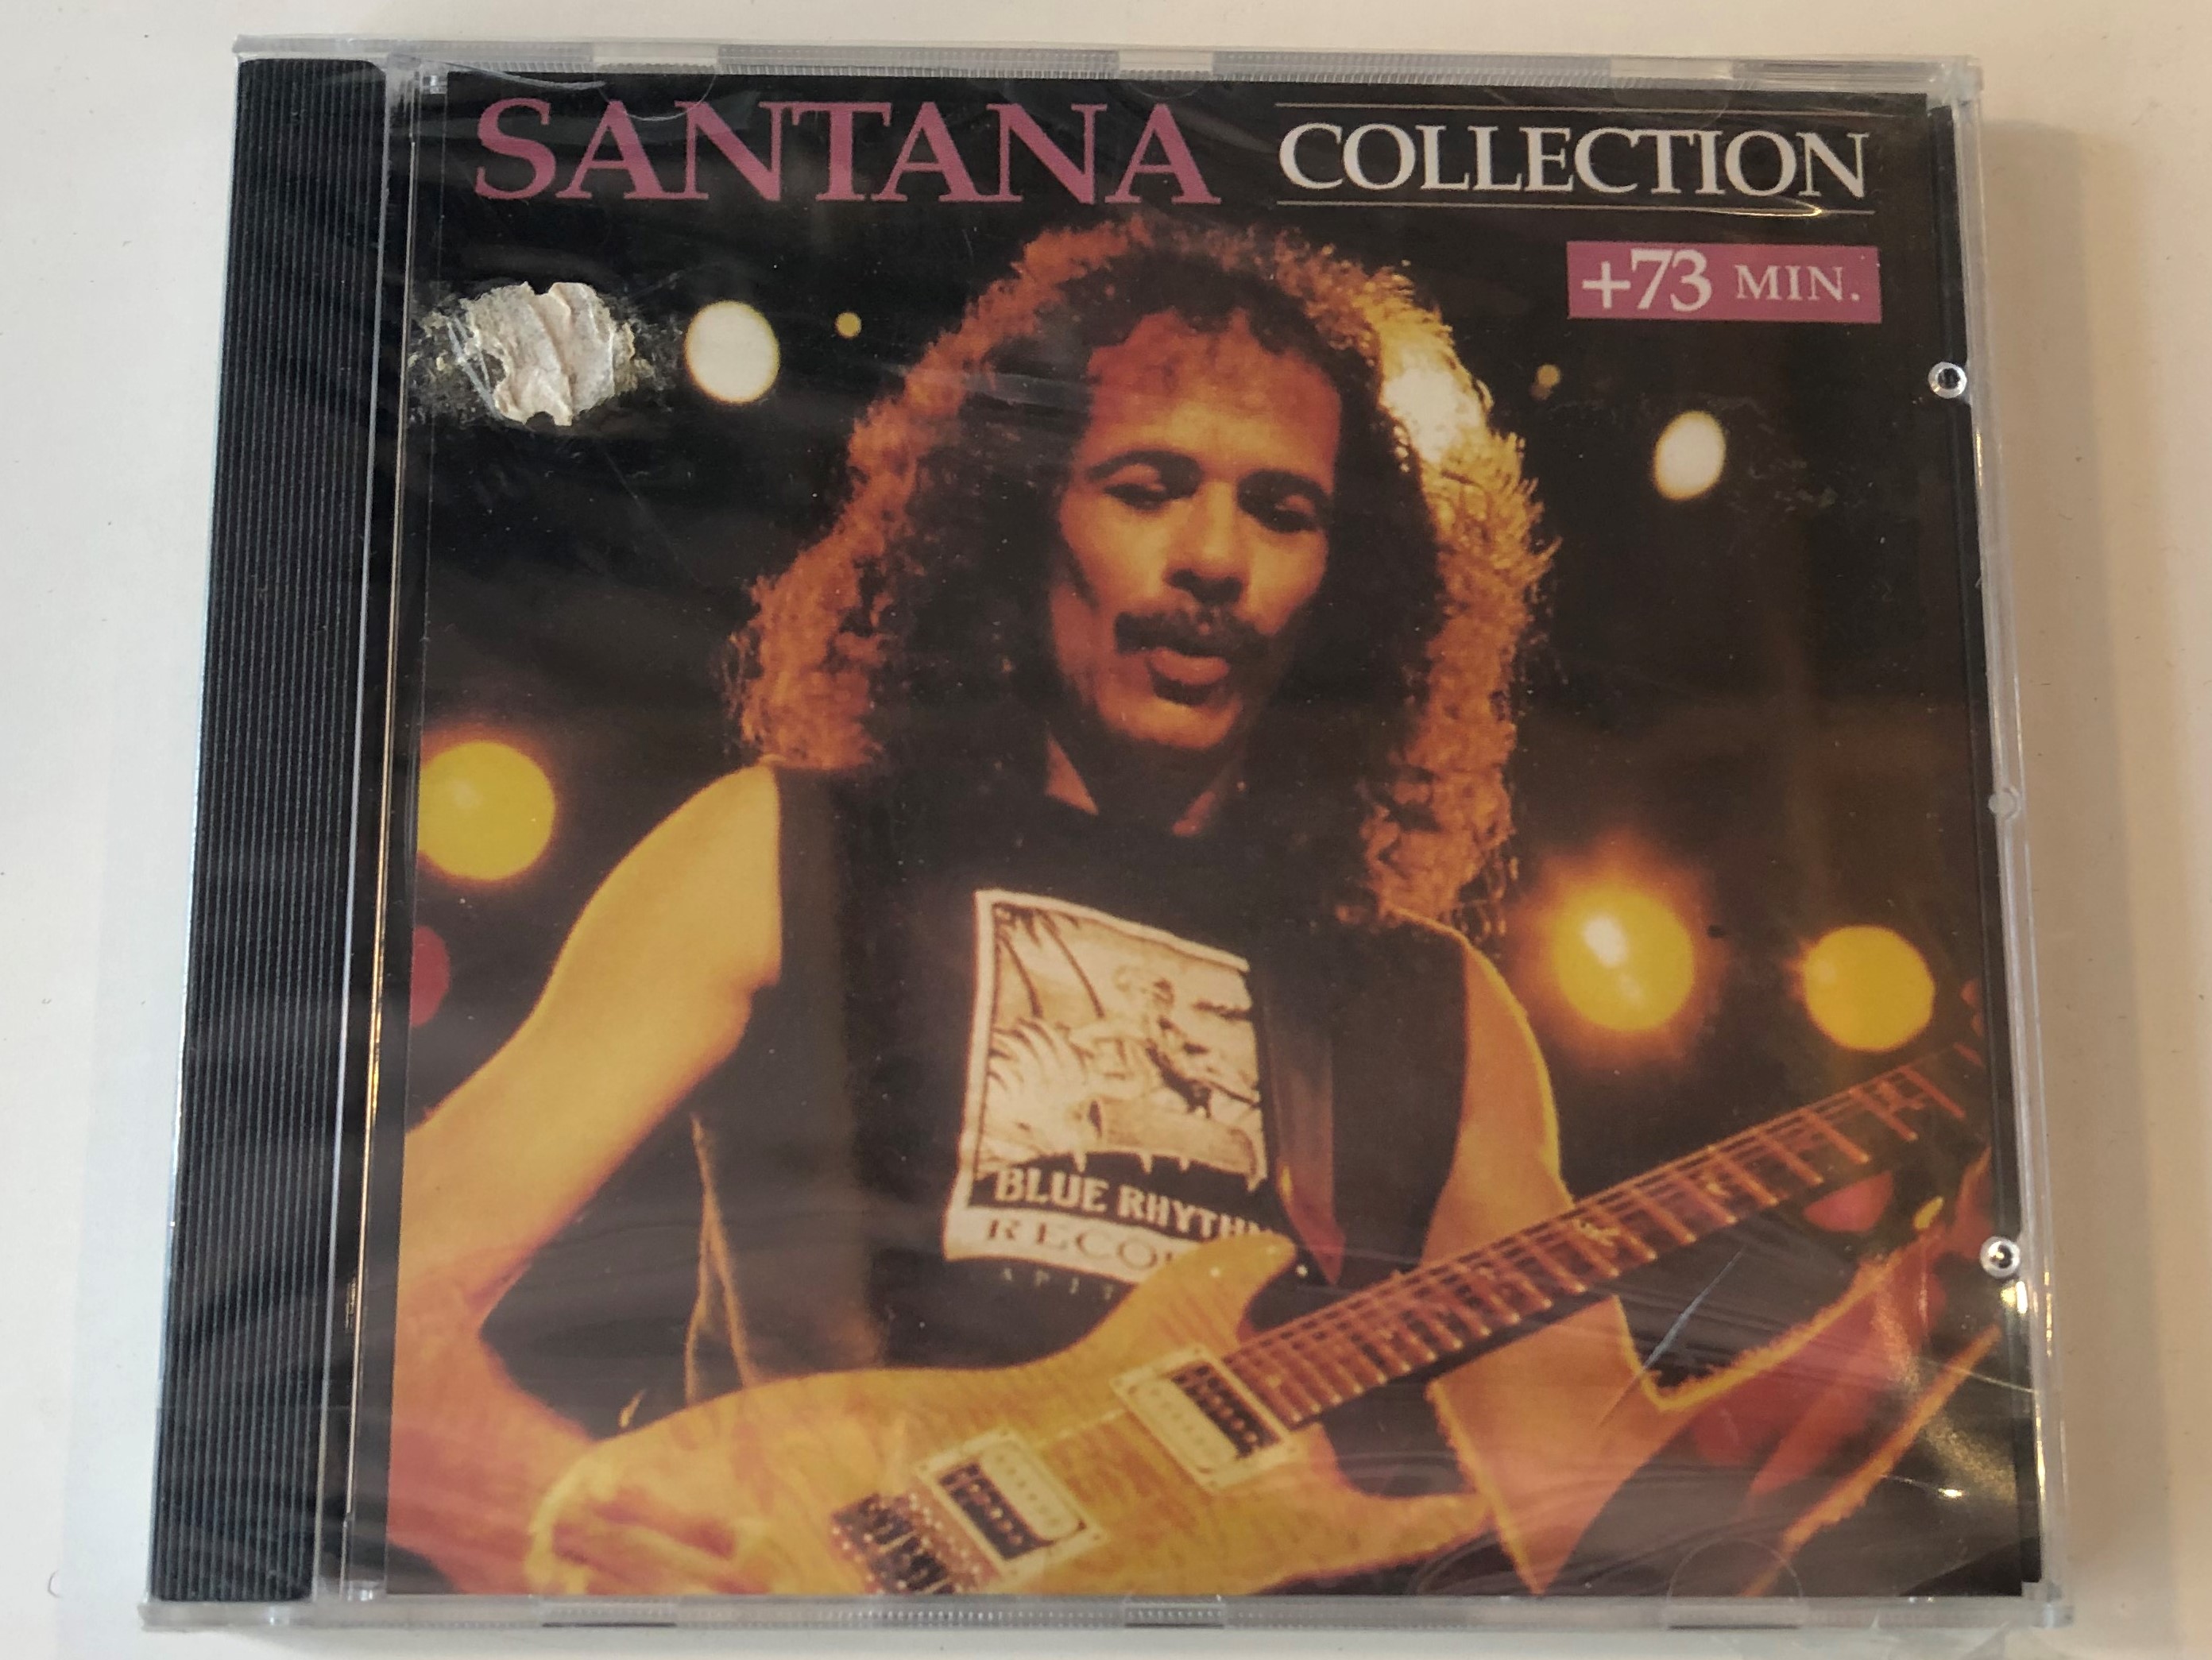 santana-collection-73-min.-the-collection-audio-cd-1994-col046-1-.jpg